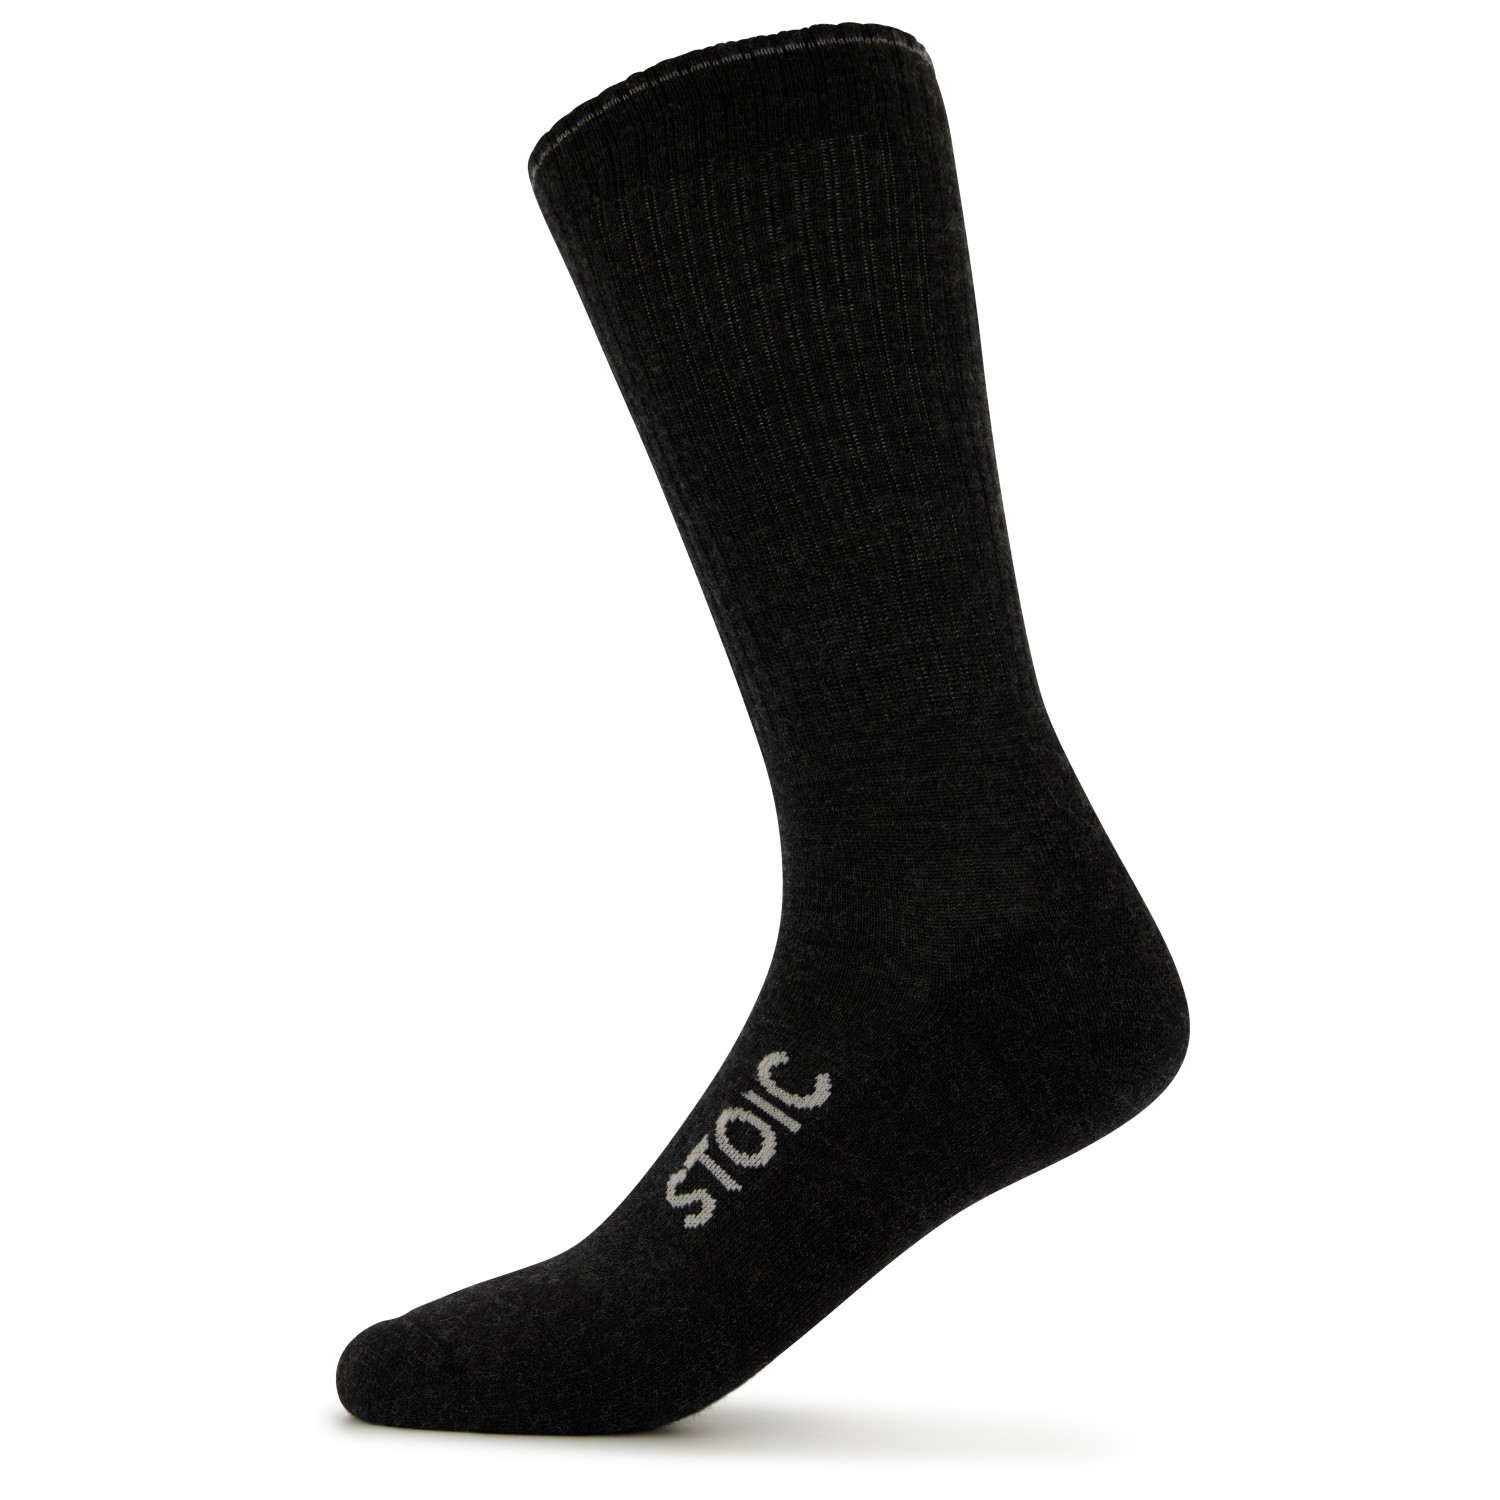 Походные носки Stoic Merino Wool Silk Hiking Socks, темно серый men wool merino socks for winter thermal warm thick hiking boot heavy soft cozy socks for cold weather 5 pack